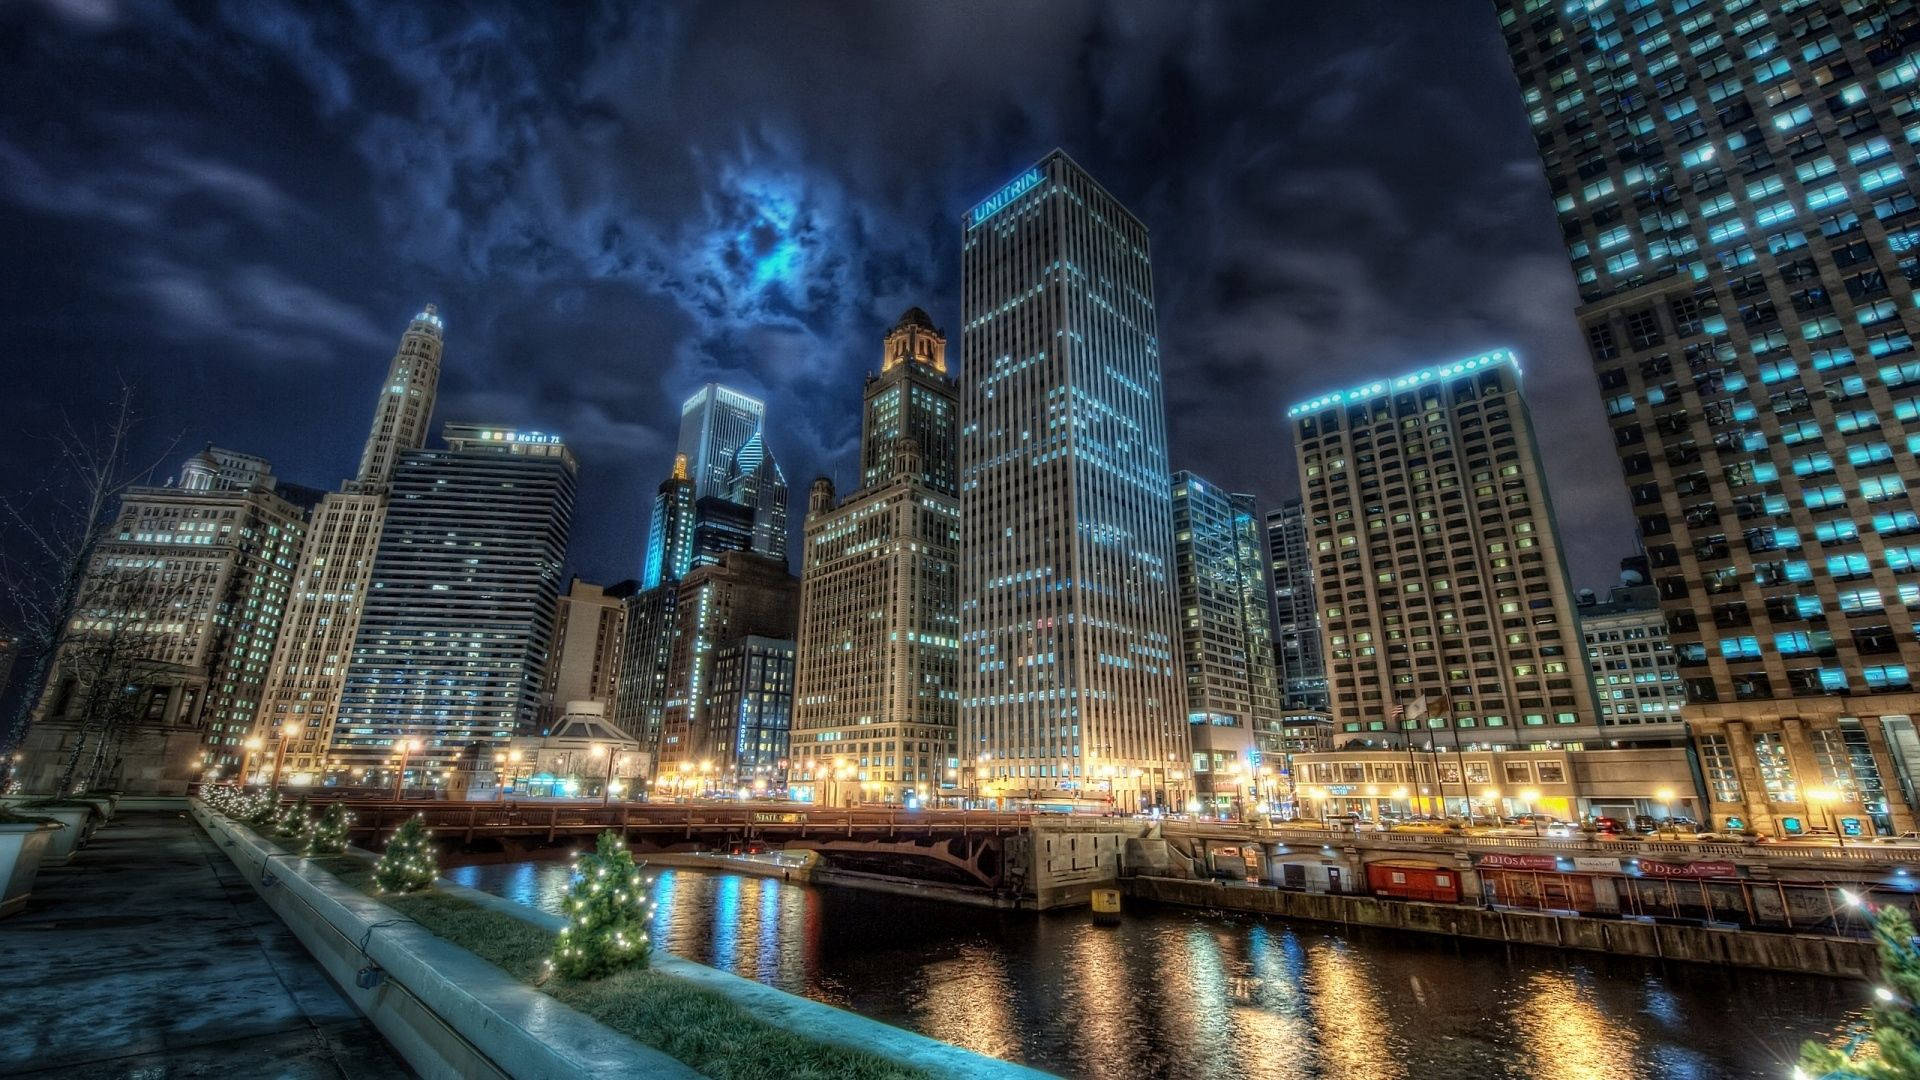 Lights On Bridge In Chicago